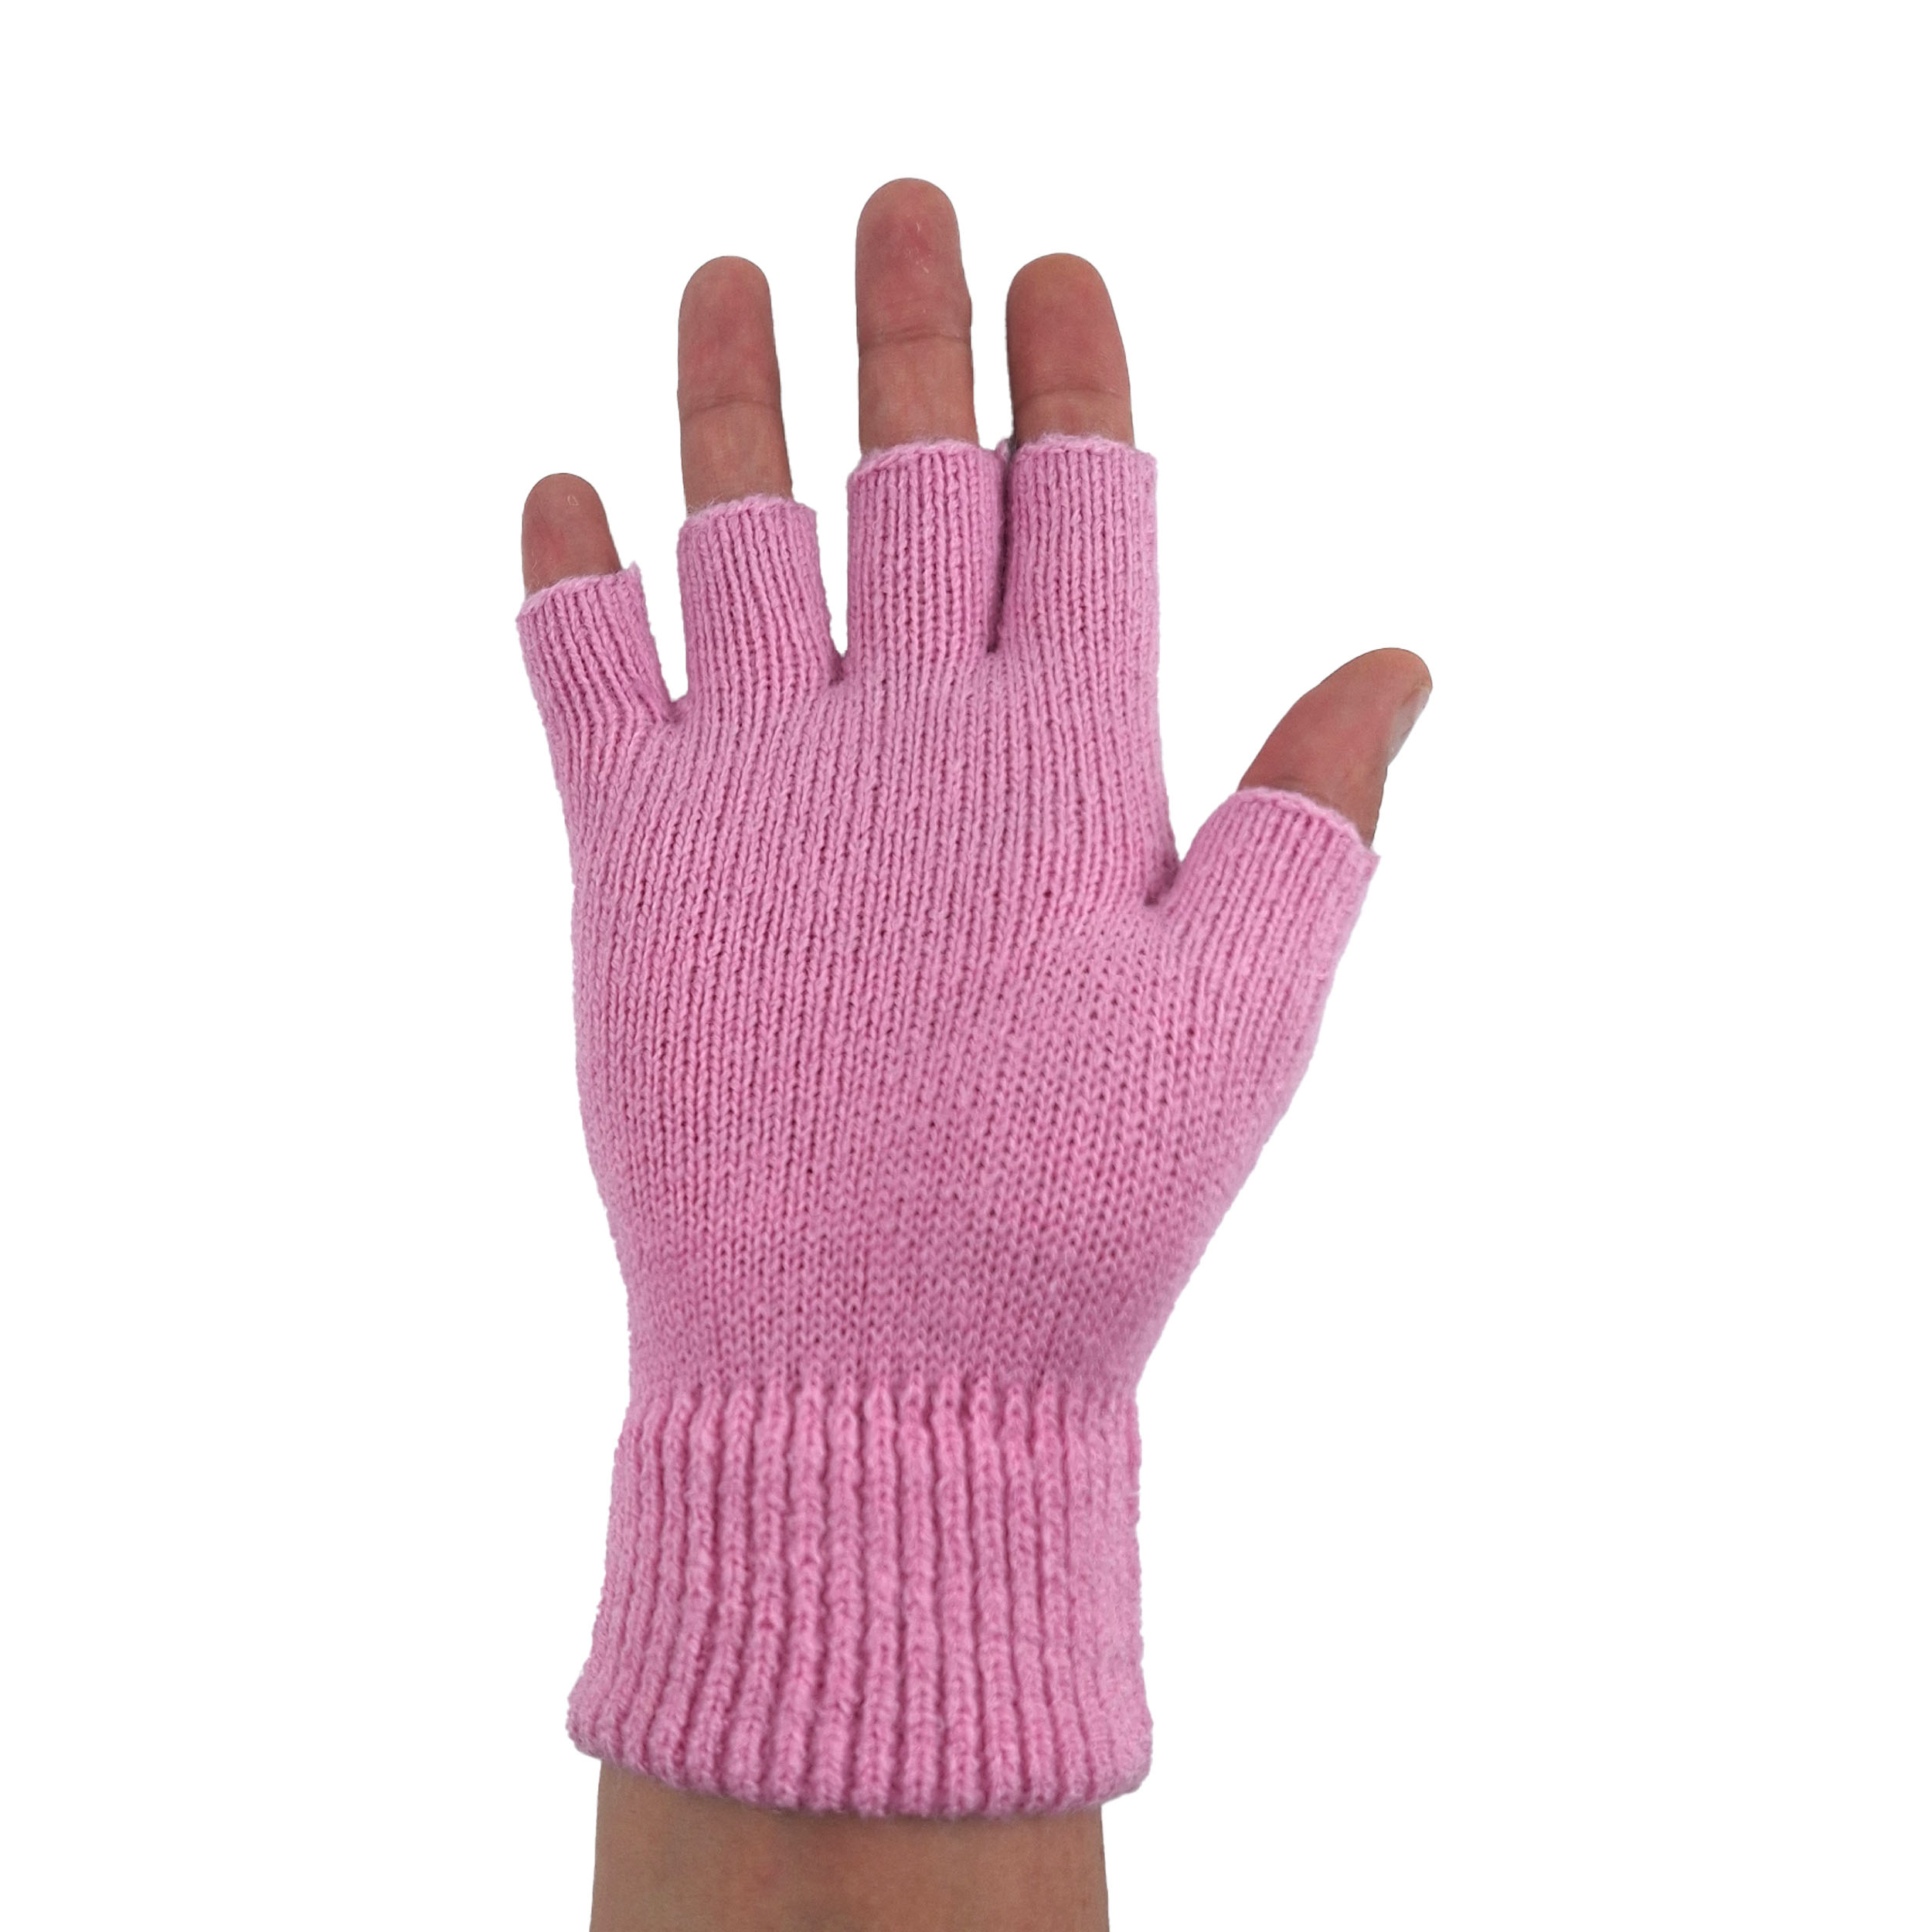 دستکش بافتنی دخترانه نیم انگشتی طرح پاپیون کد 1094 -  - 41